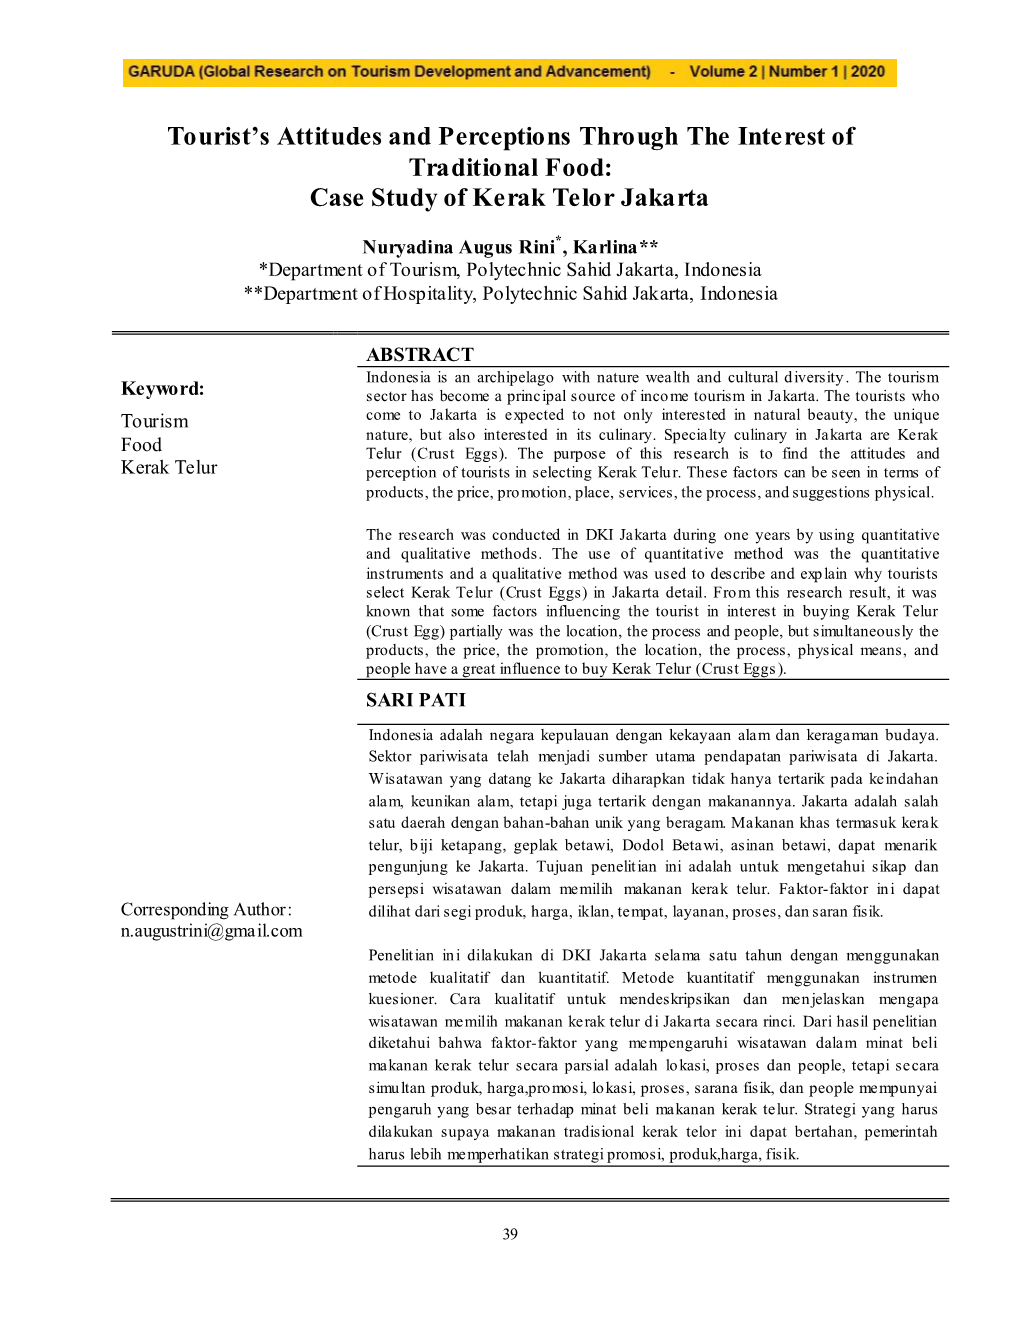 Case Study of Kerak Telor Jakarta